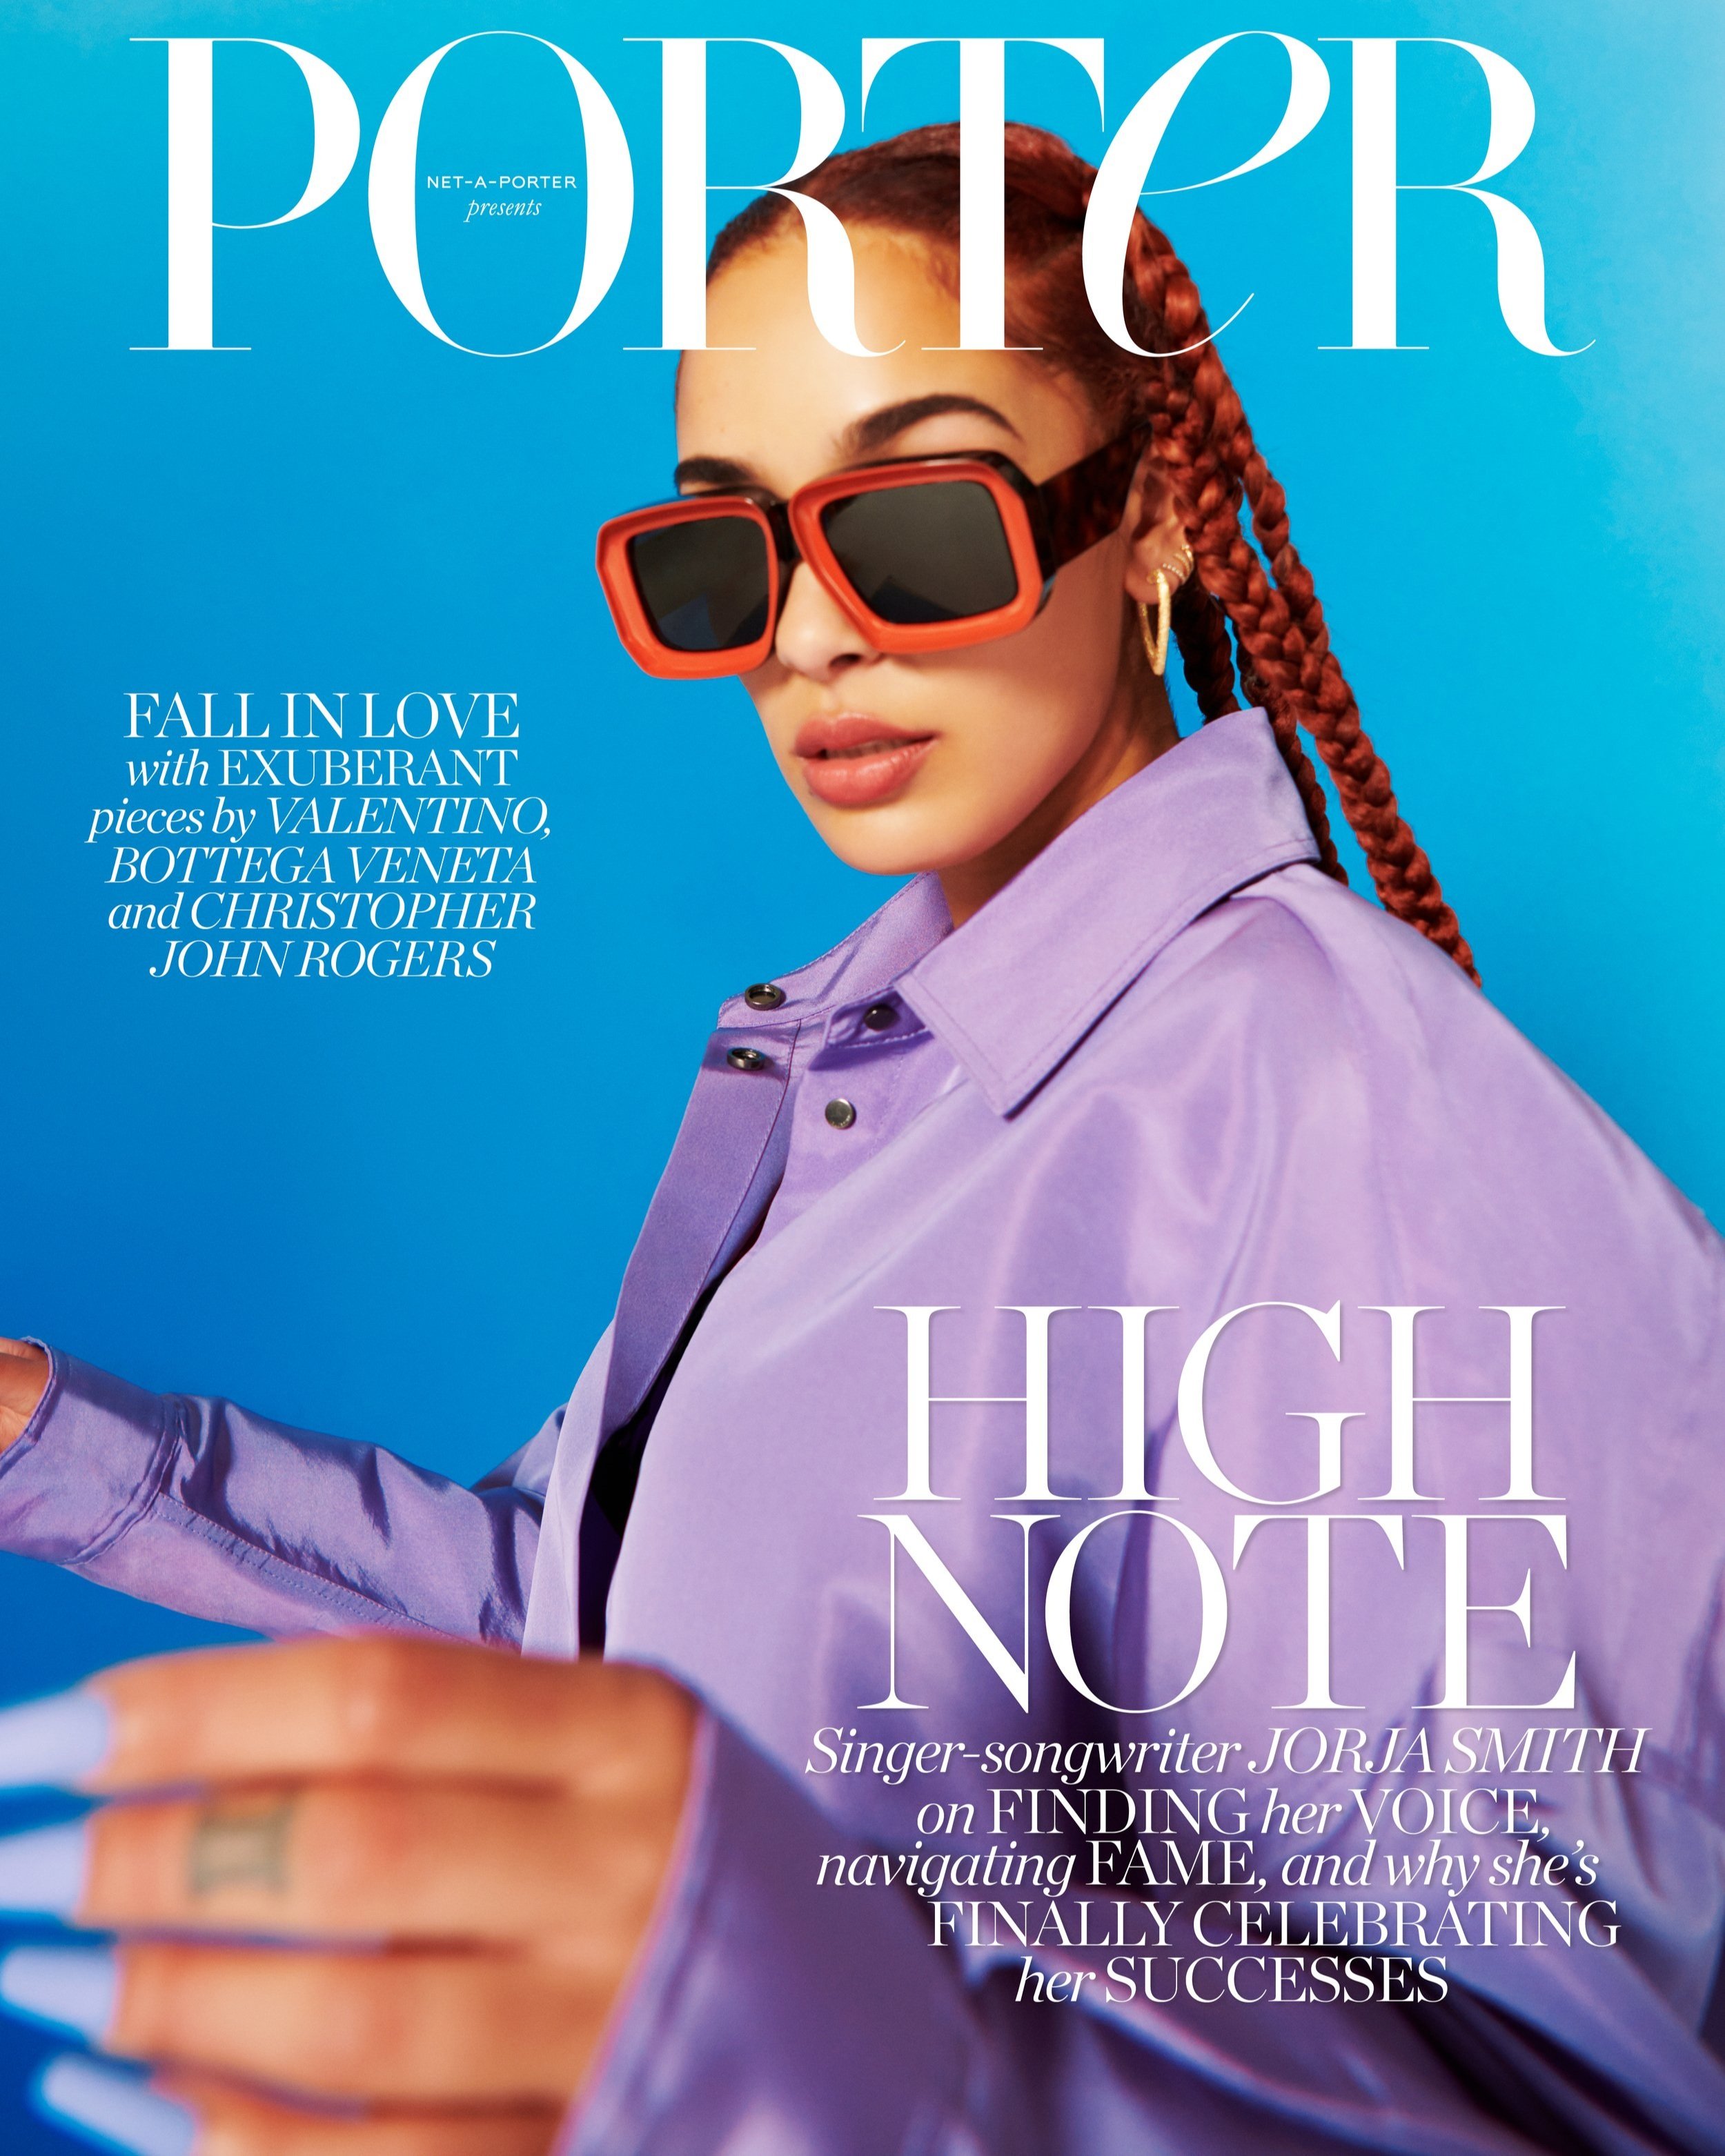 Jorja Smith for Net-a-Porter Magazine 2021.